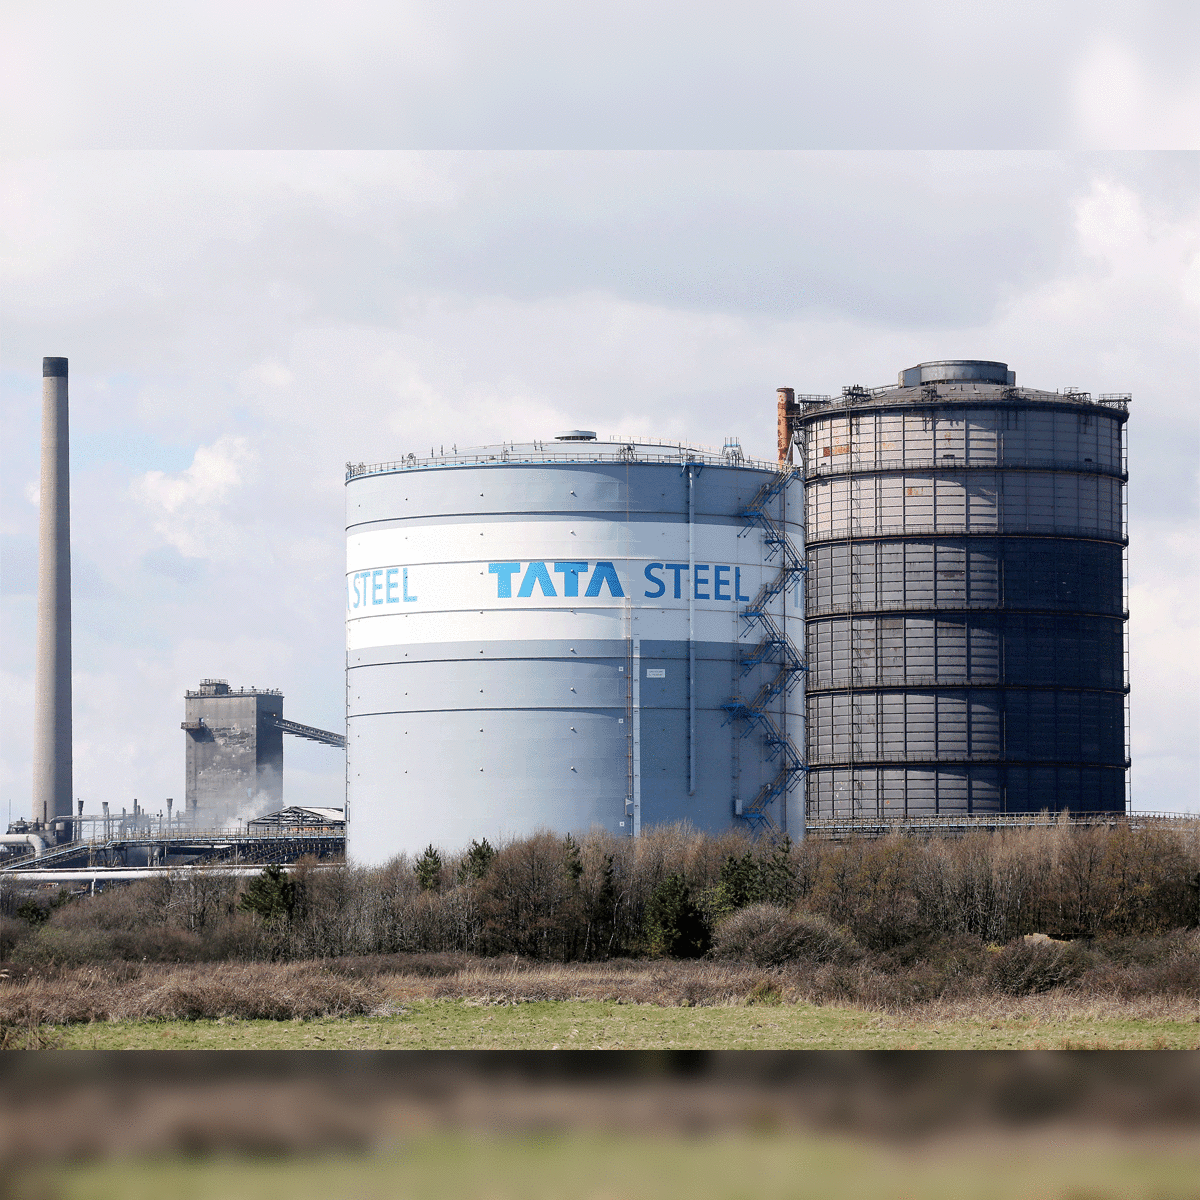 How Tata Steel built its analytics capabilities